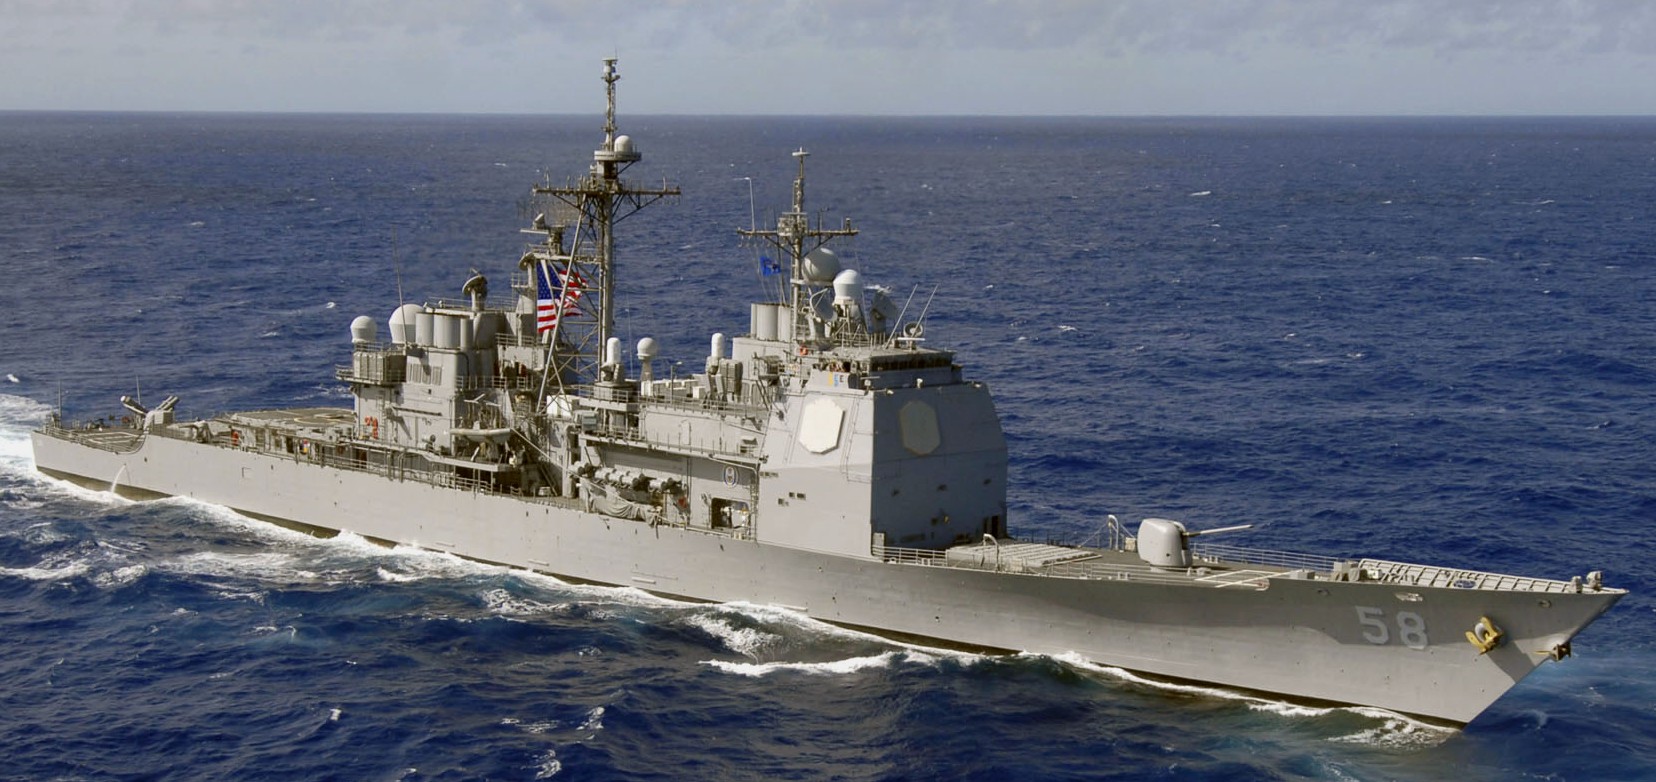 cg-58 uss philippine sea ticonderoga class guided missile cruiser aegis us navy 25